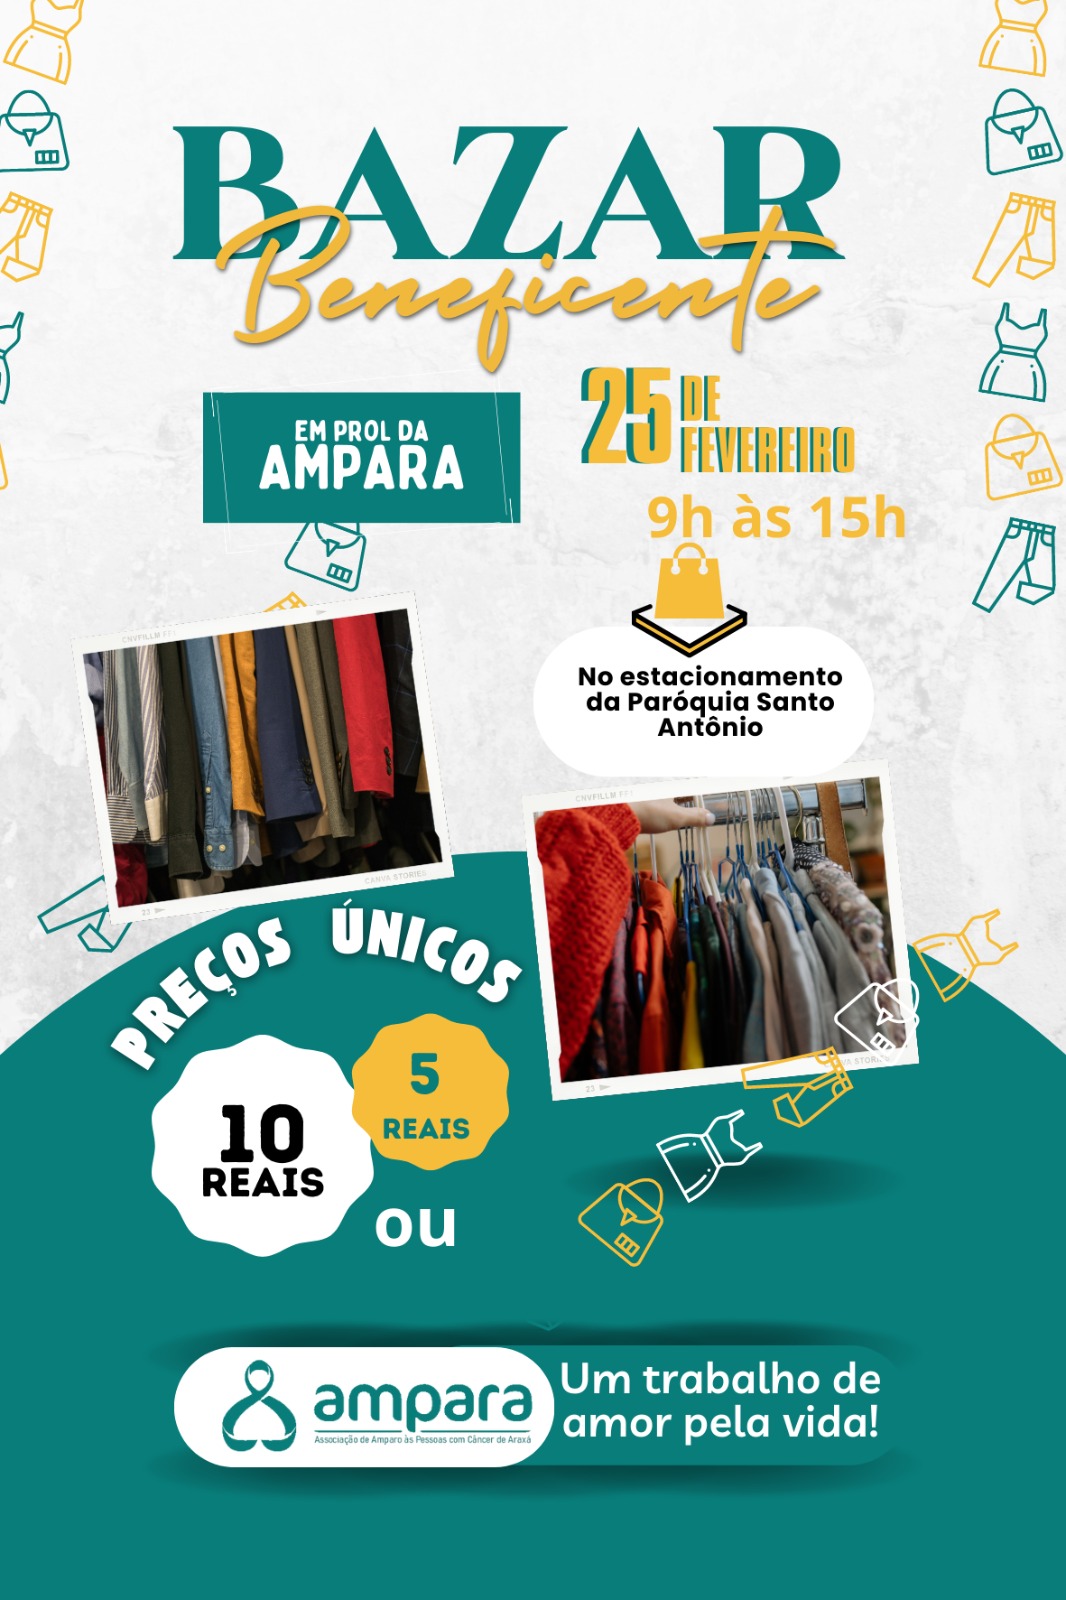 Ampara realiza bazar beneficente no próximo sábado (25), na Paróquia Santo Antônio